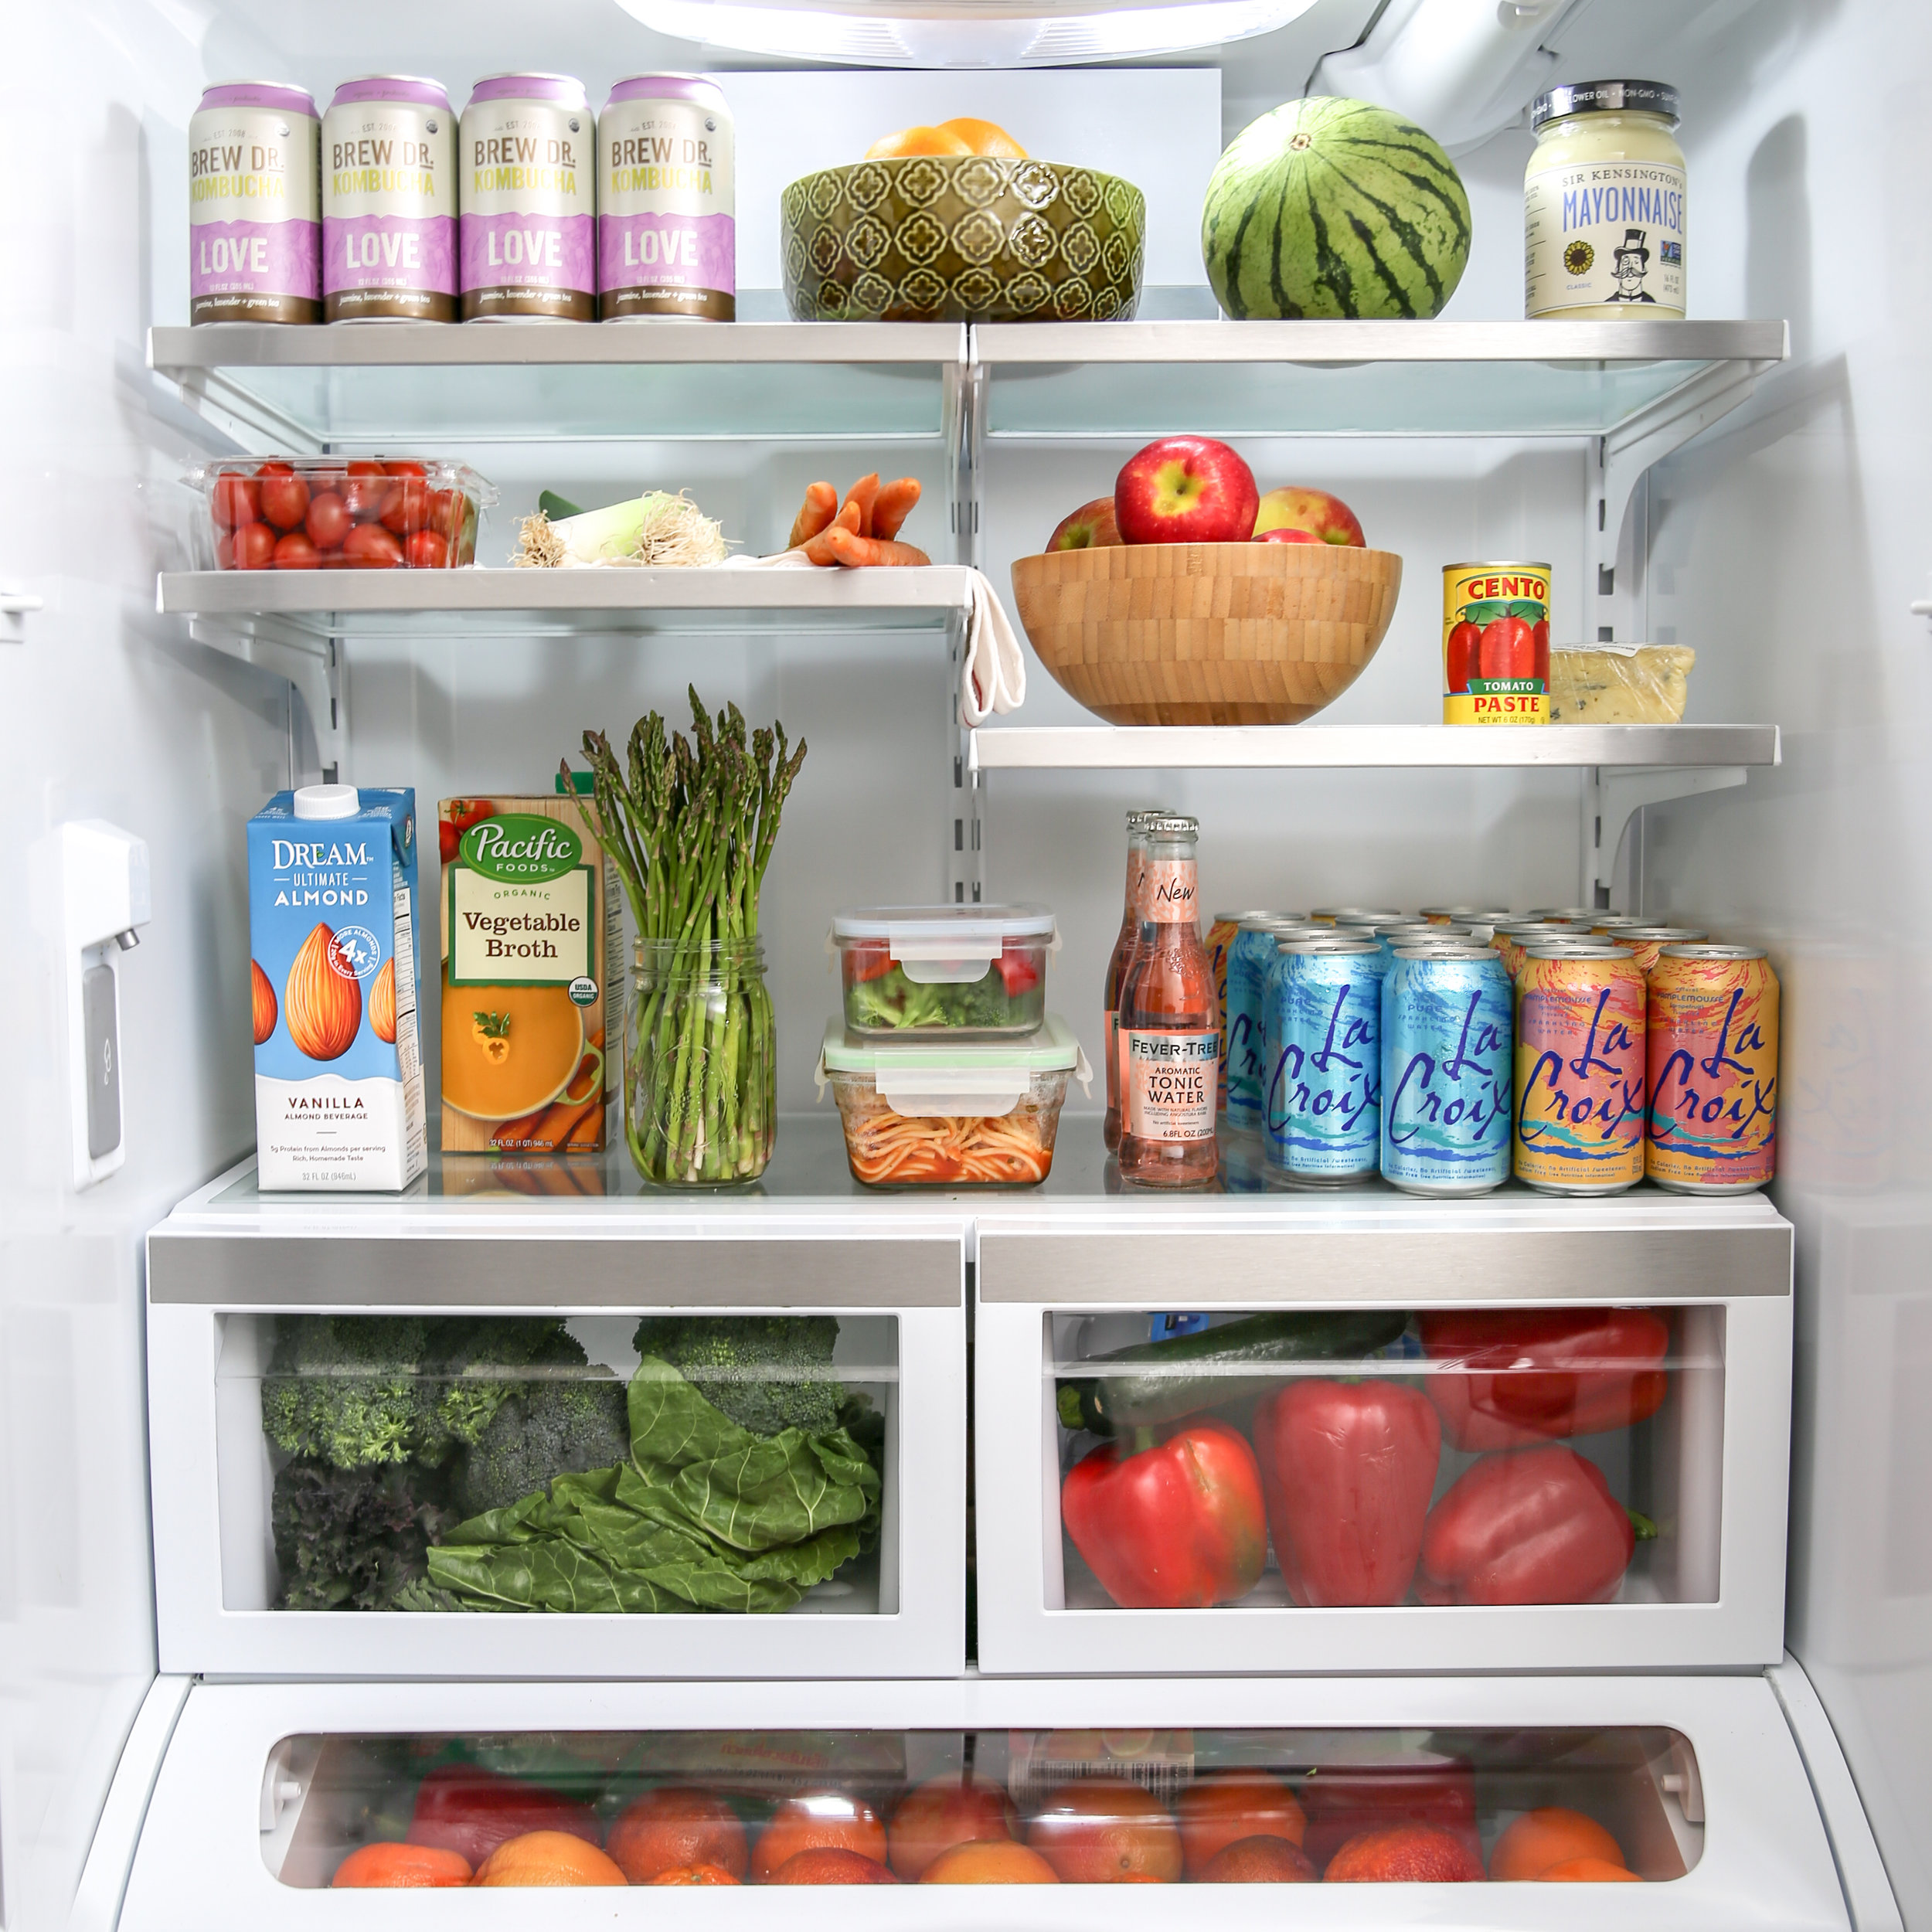 There some juice in the fridge. Холодильник с продуктами. Холодильник с едой. Холодильник внутри. Чистый холодильник.